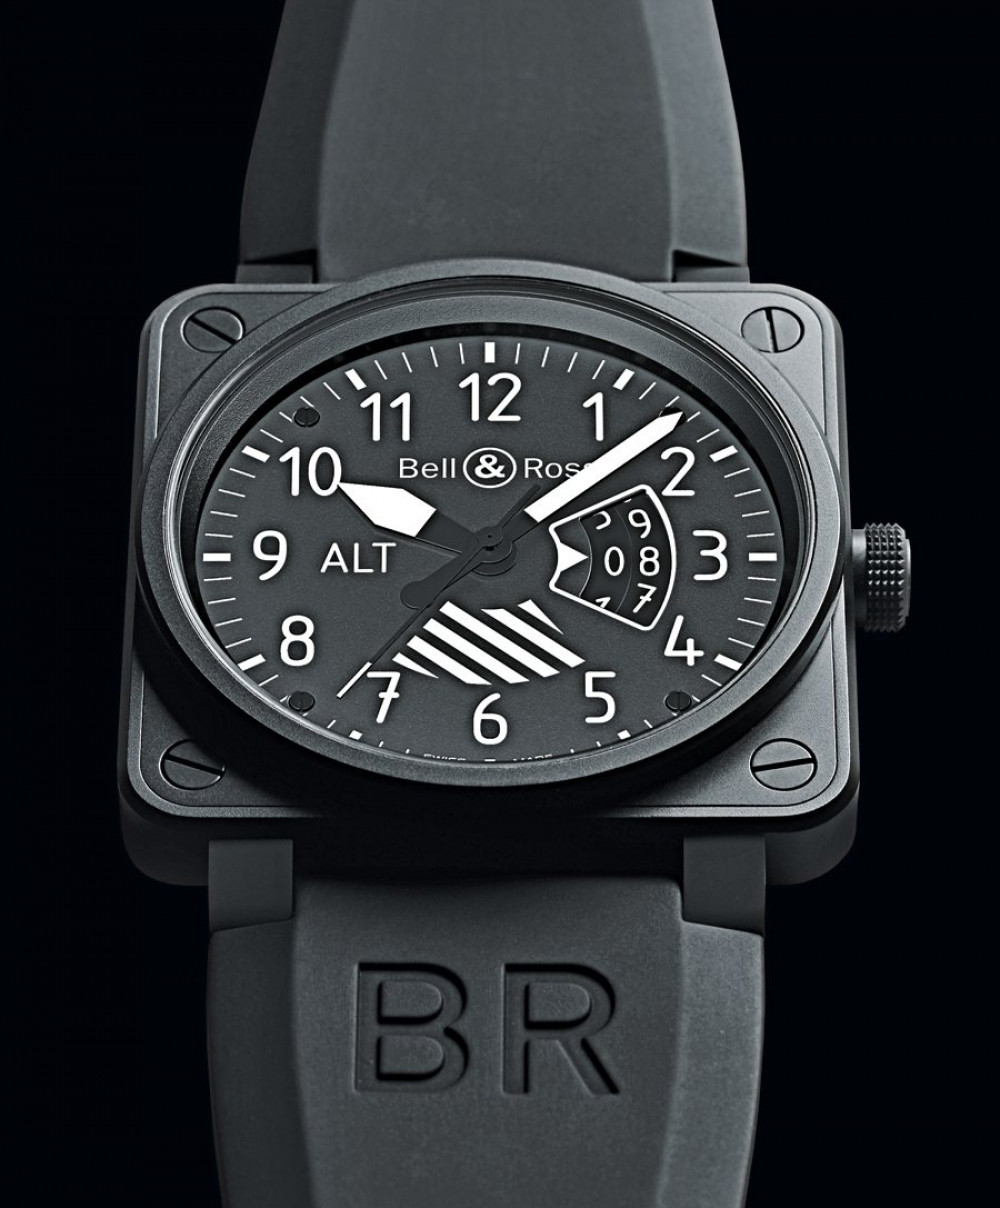 Zegarek firmy Bell & Ross, model BR 01 Altimeter